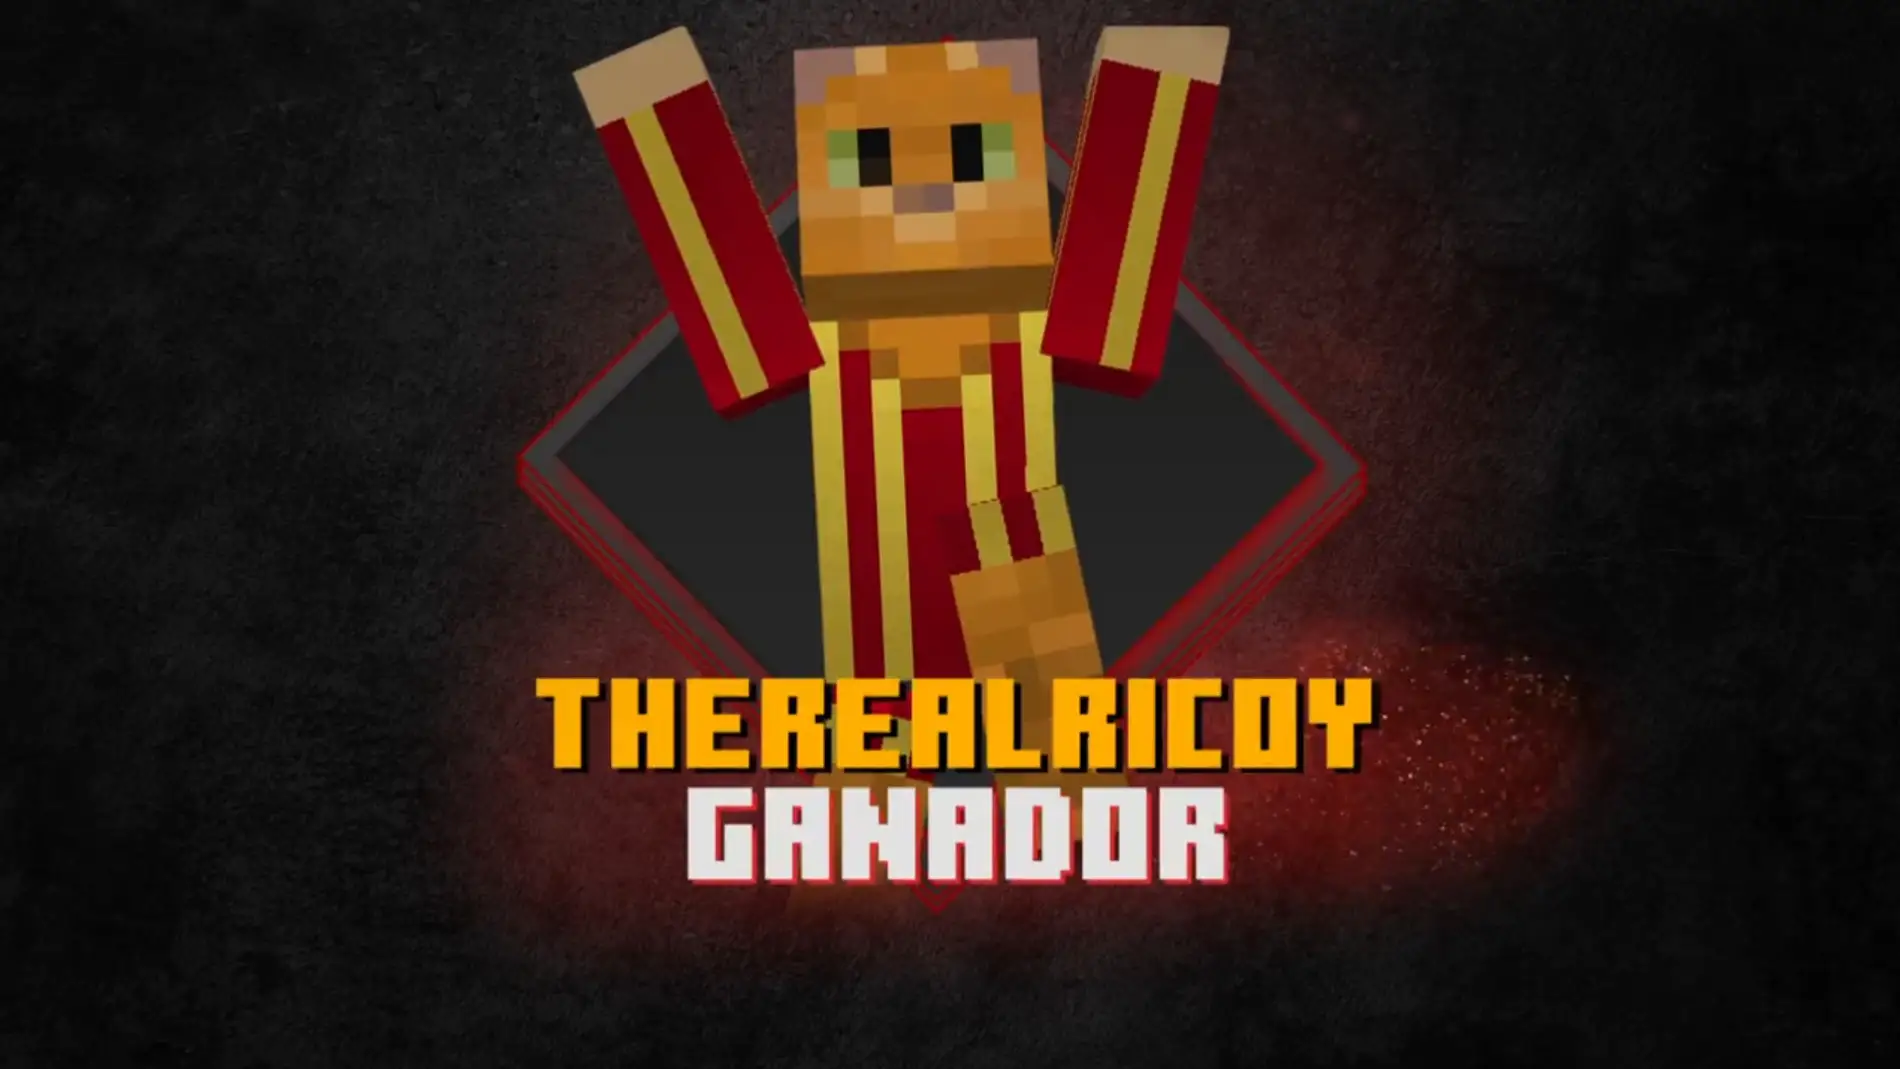 Cartel que anuncia a Ricoy como ganador de Minecraft Extremo 2